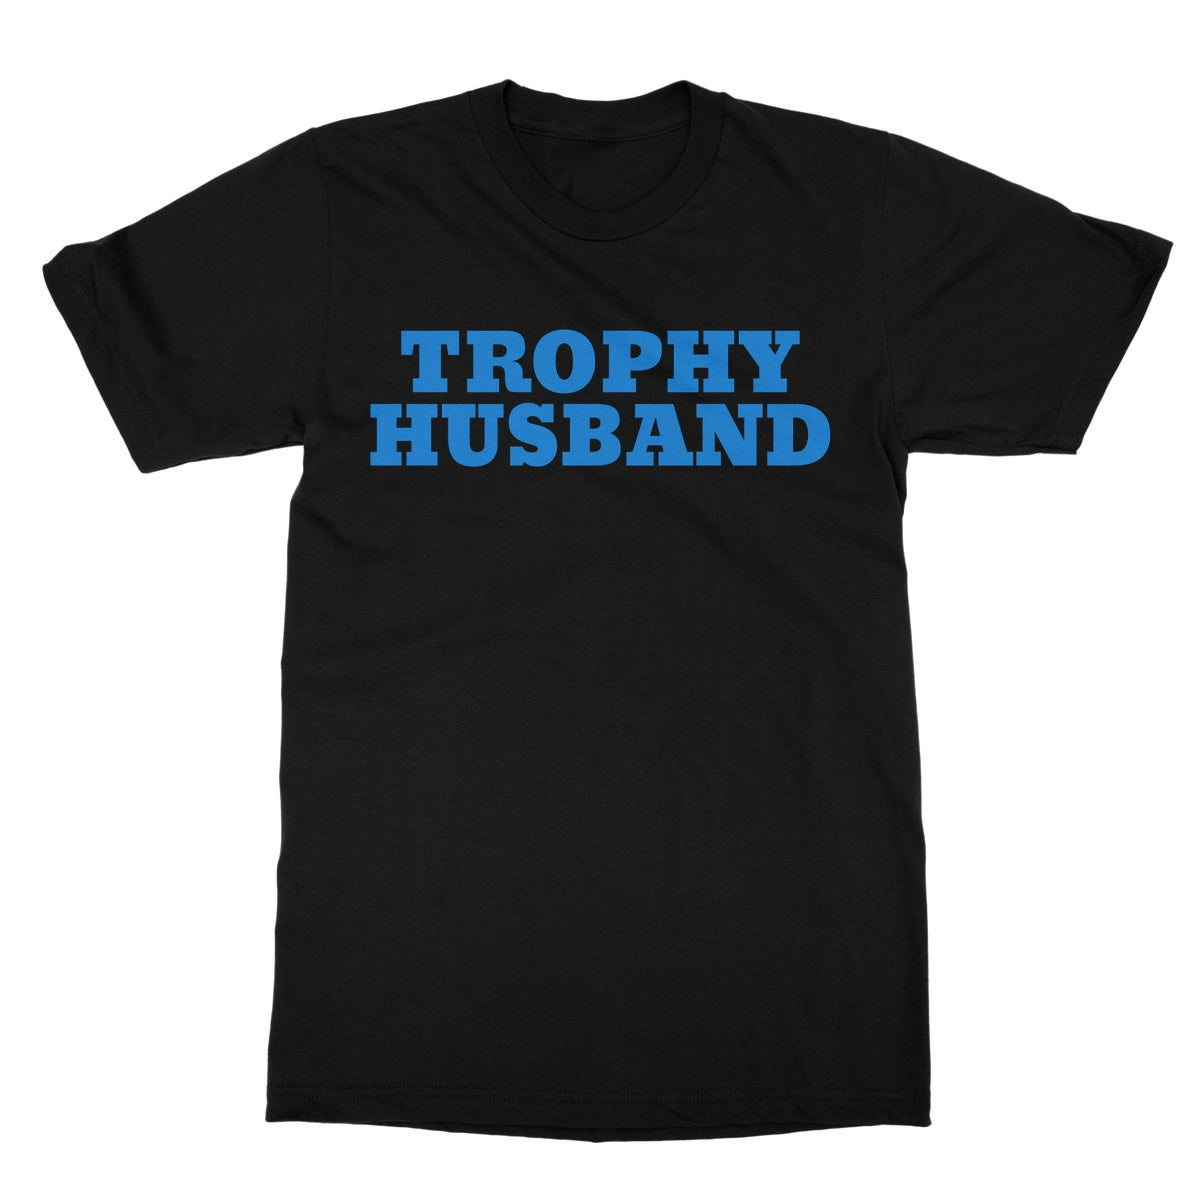 trophy husband t shirt black